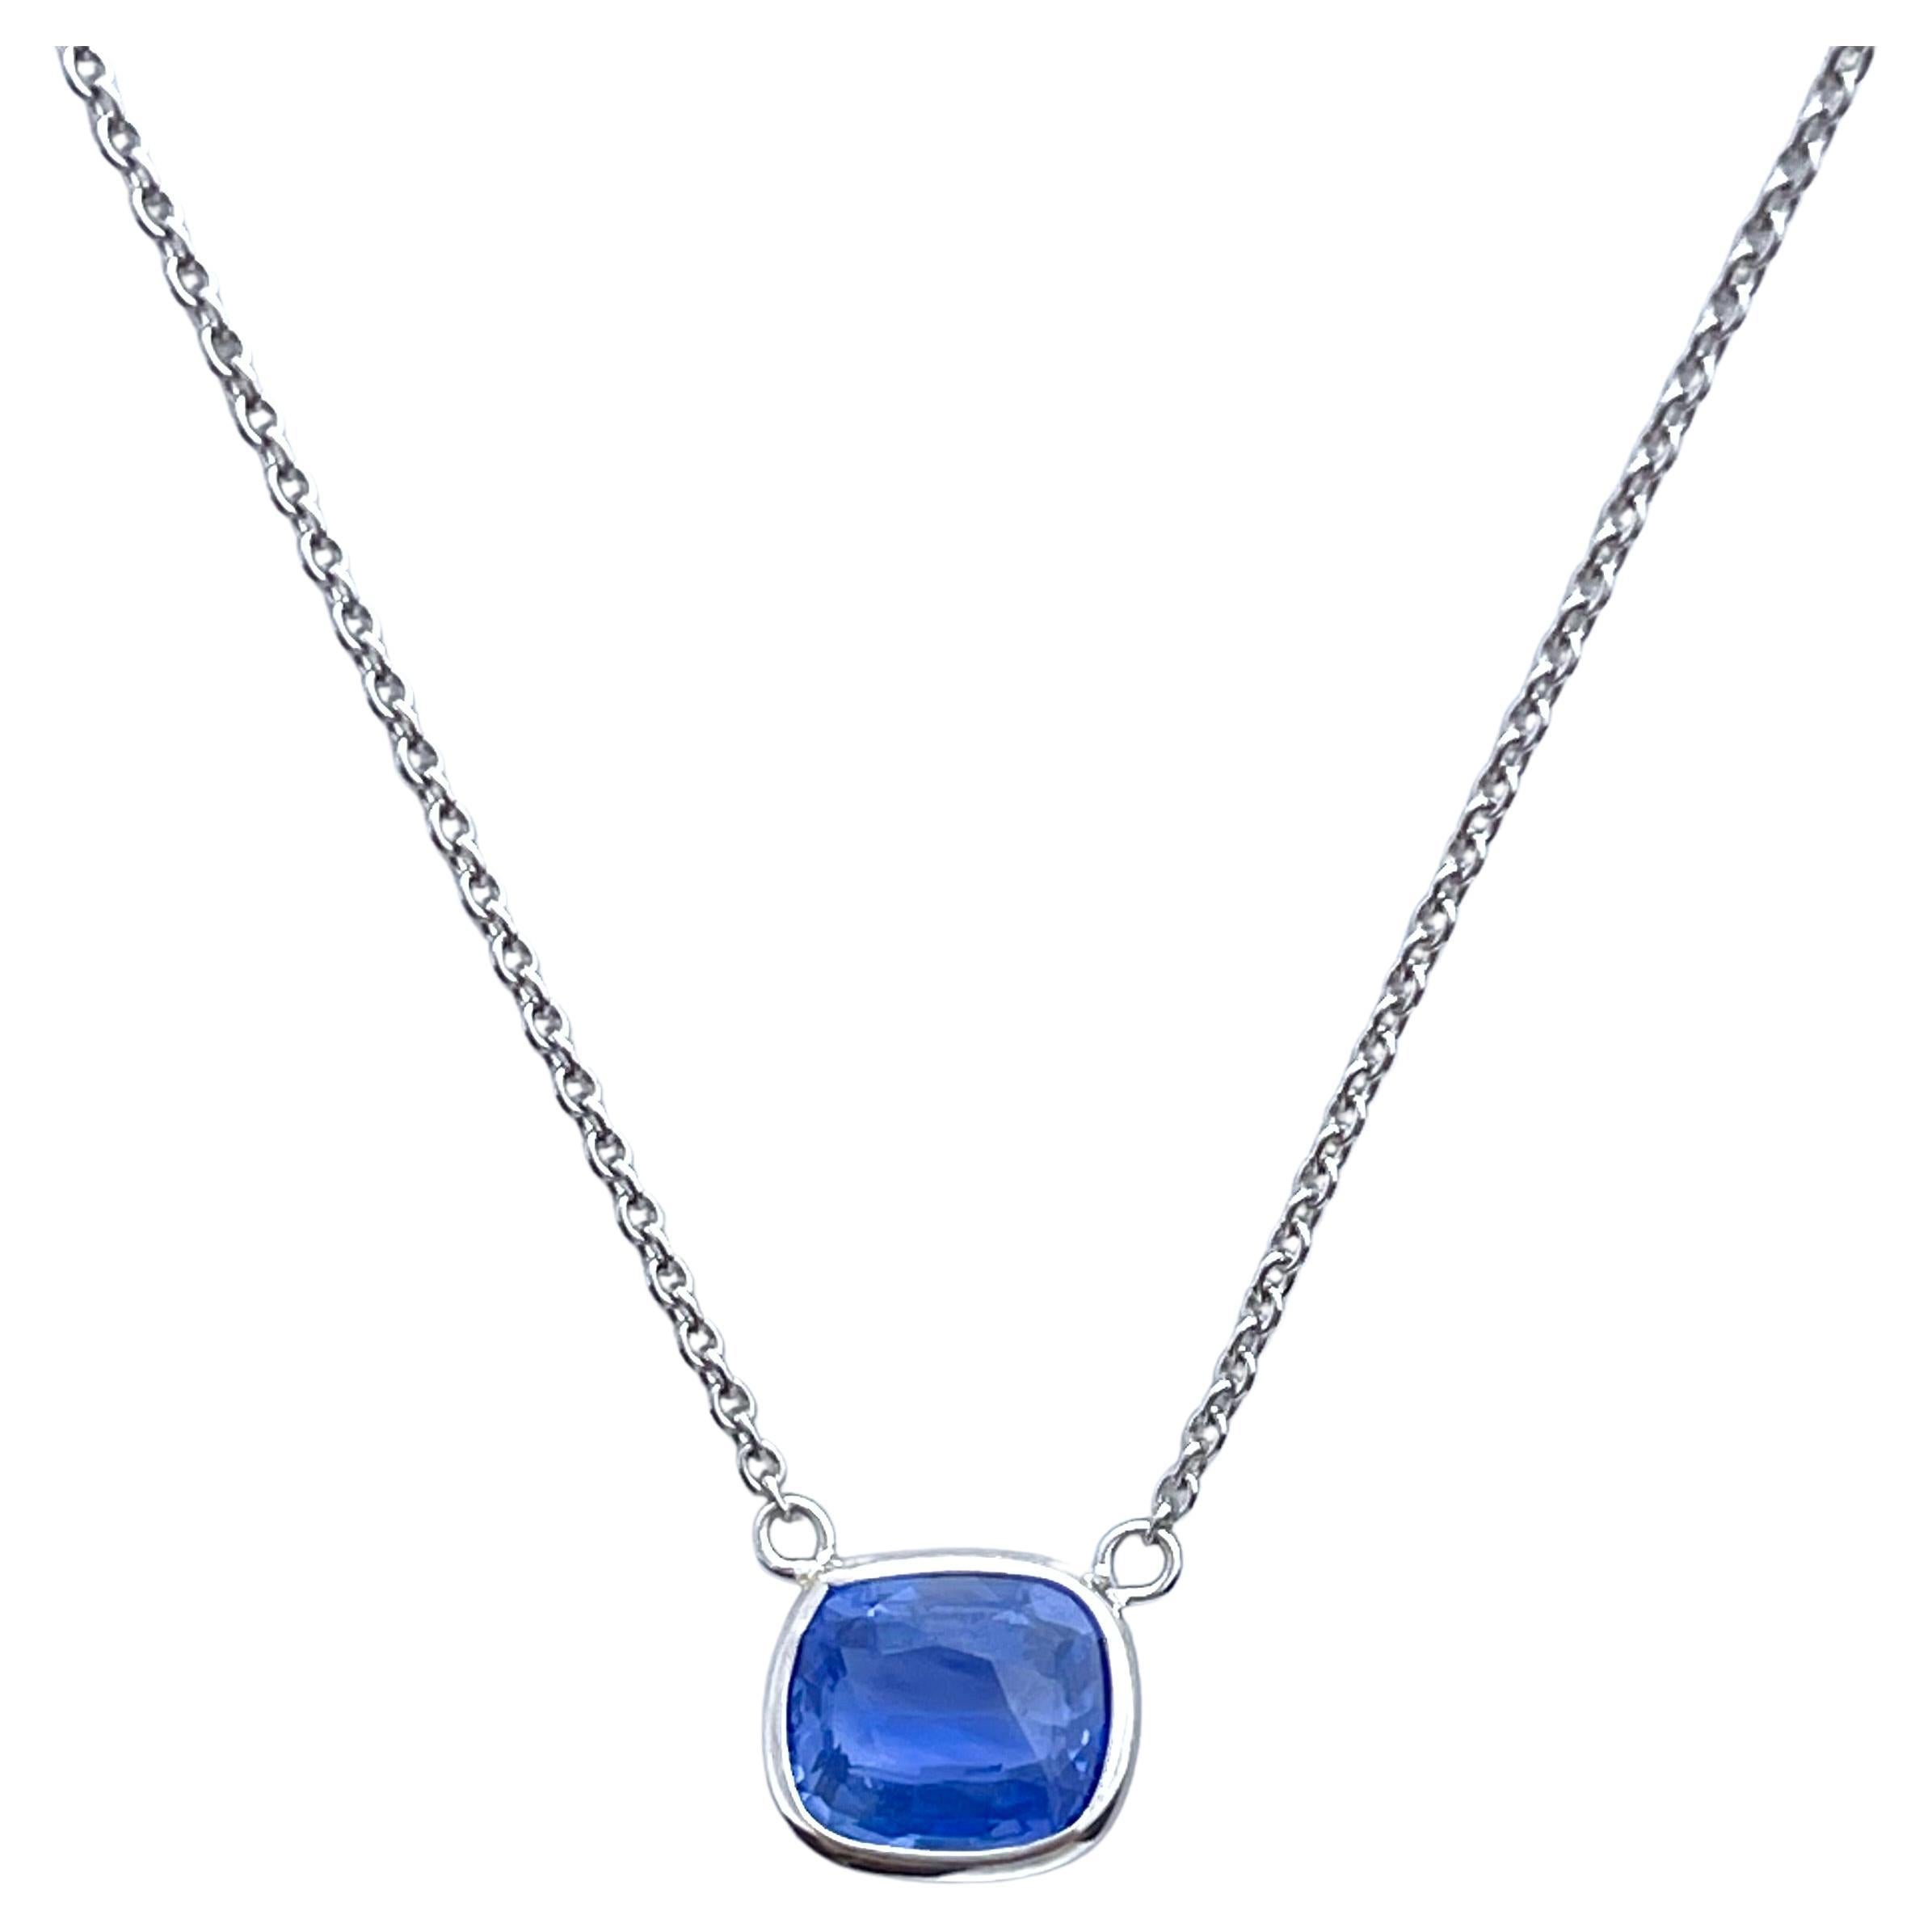 2.57 Carat Sapphire Blue Cushion &Fashion Necklaces Berberyn Certified In 14K WG For Sale